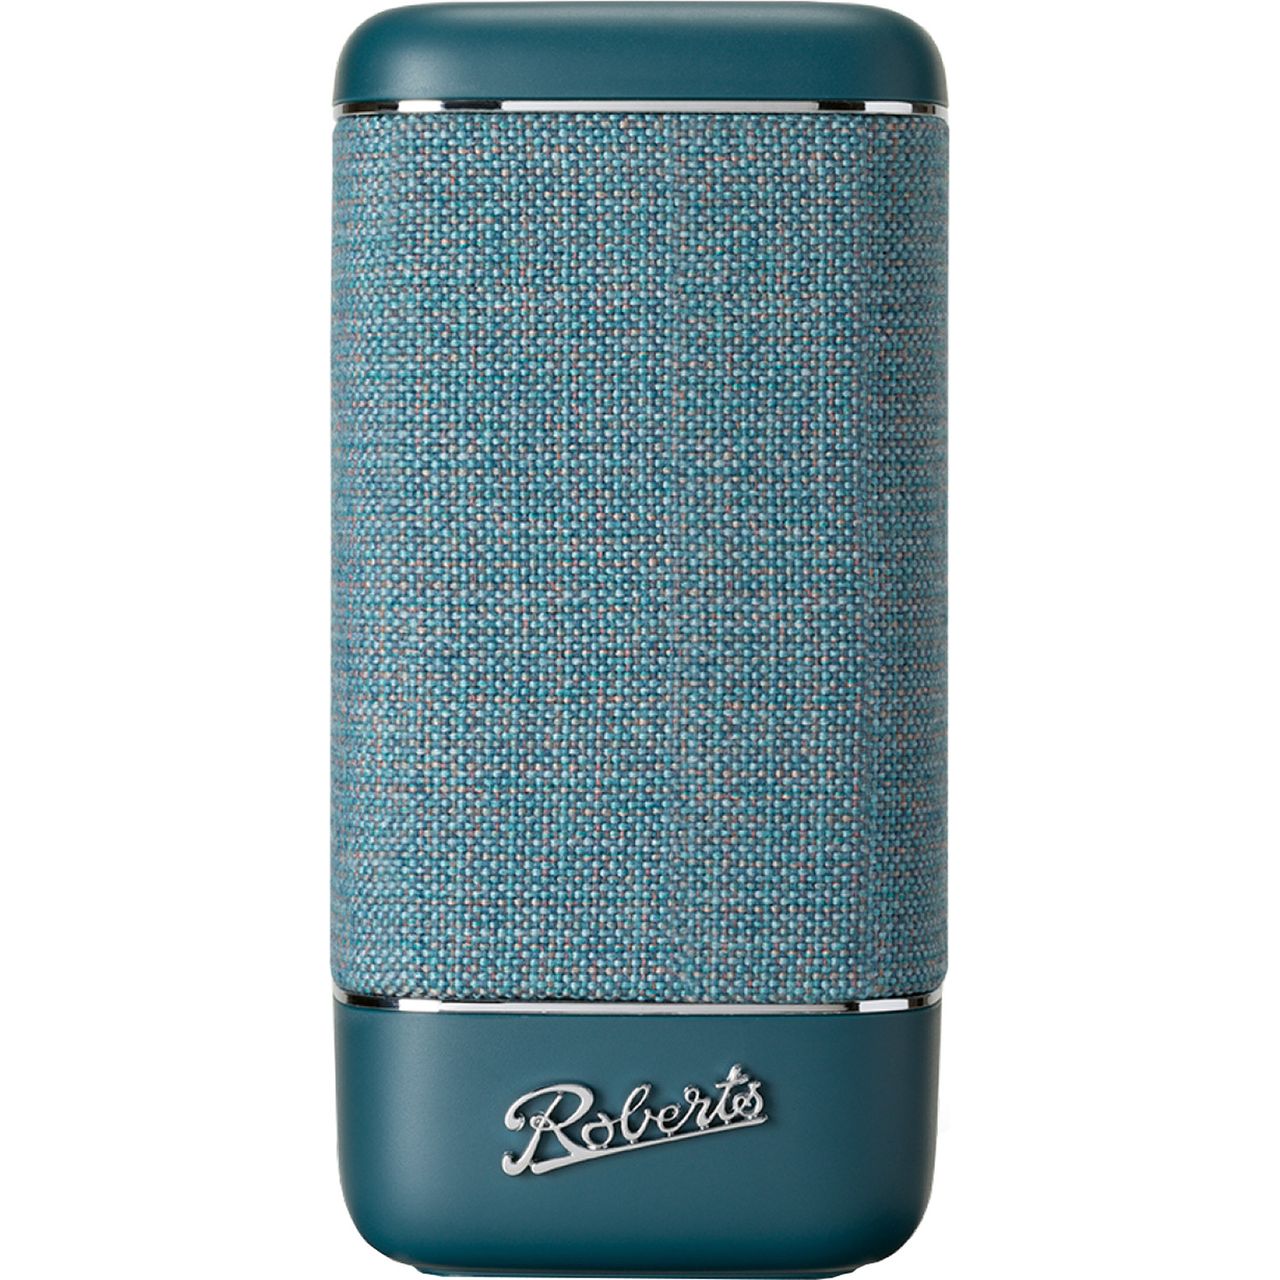 Roberts Beacon 320 Wireless Speaker - Teal